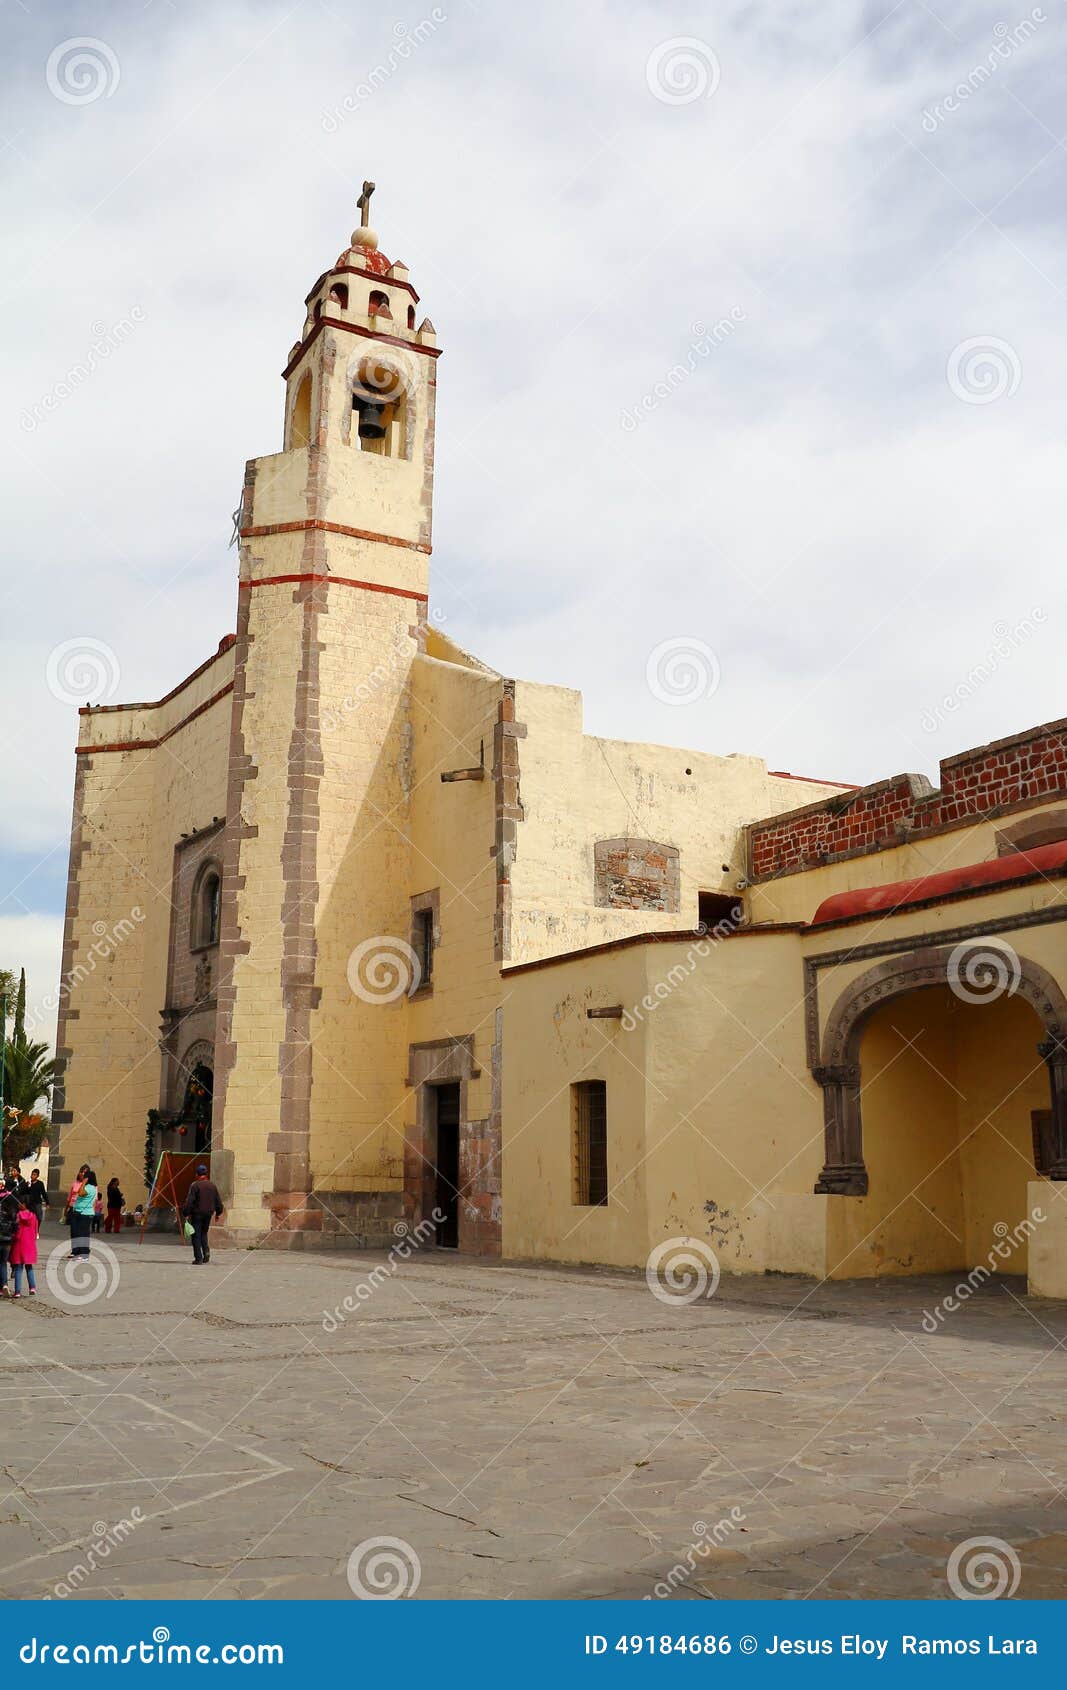 Iglesia II de San Francisco de asis. Iglesia de San Francisco de asis, ciudad del del Río, estado mexicano del tepeji del hidalgo